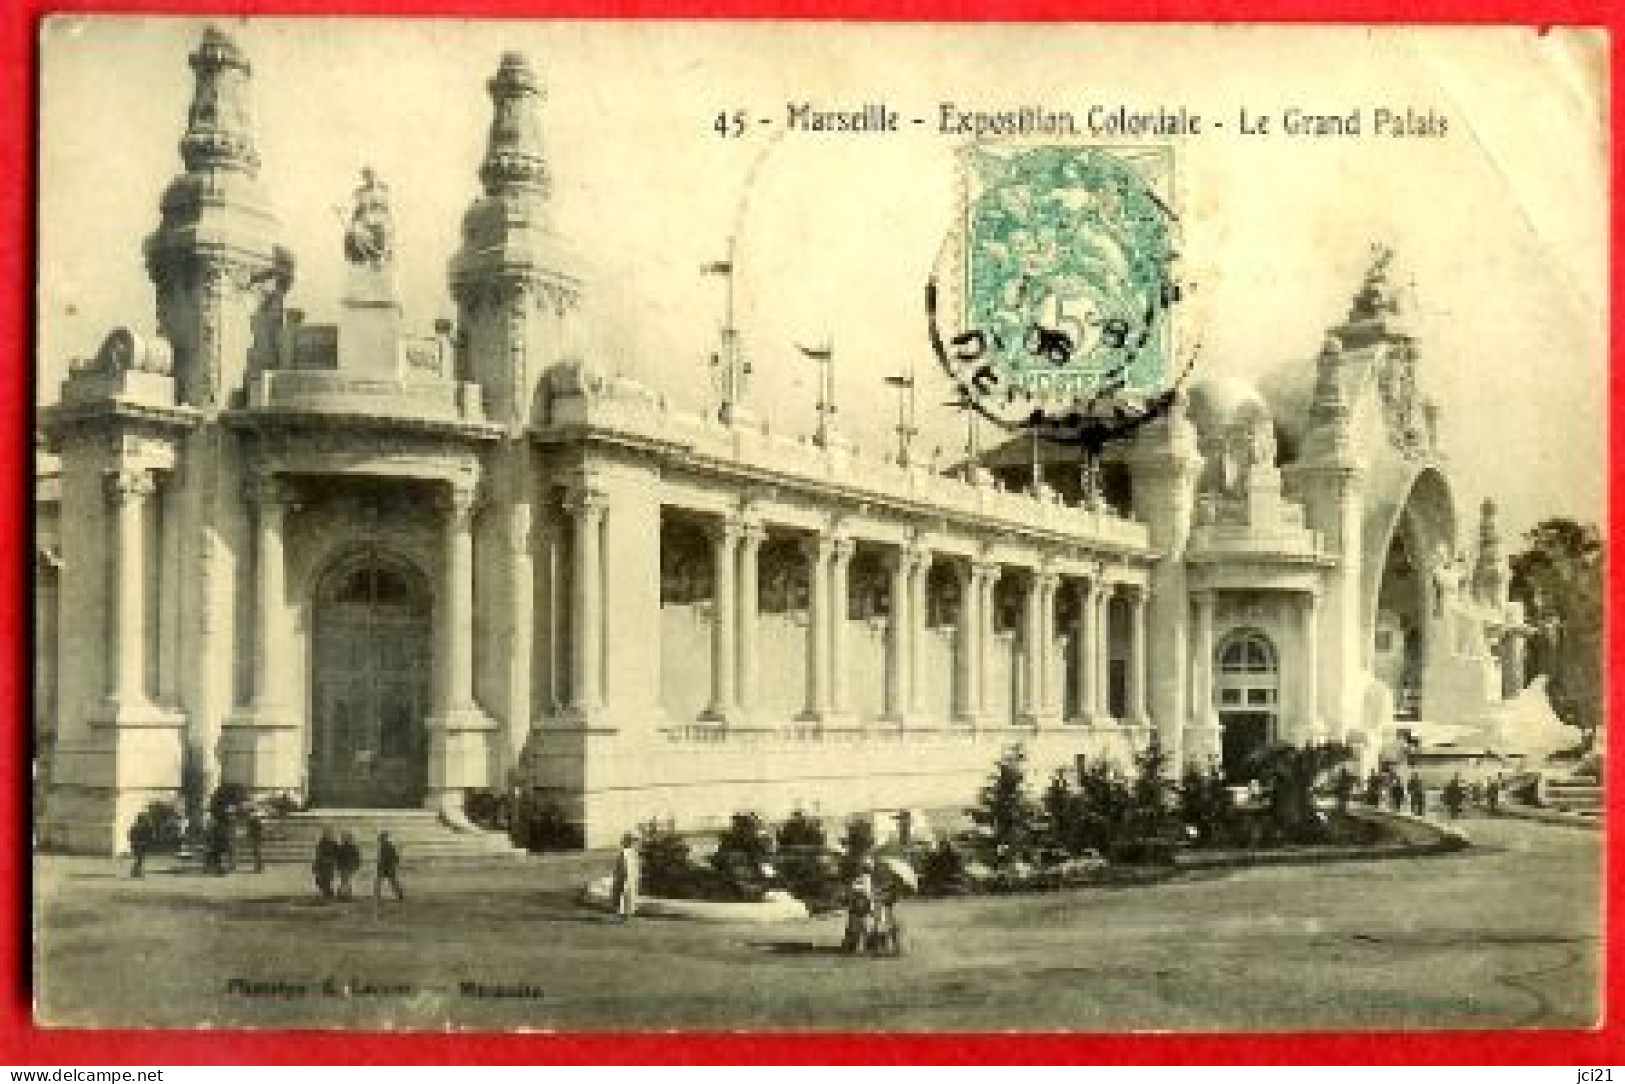 13 - MARSEILLE - EXPOSITION COLONIALE - LE GRAND PALAIS - CPA ANIMÉE (337)_CP70 - Colonial Exhibitions 1906 - 1922